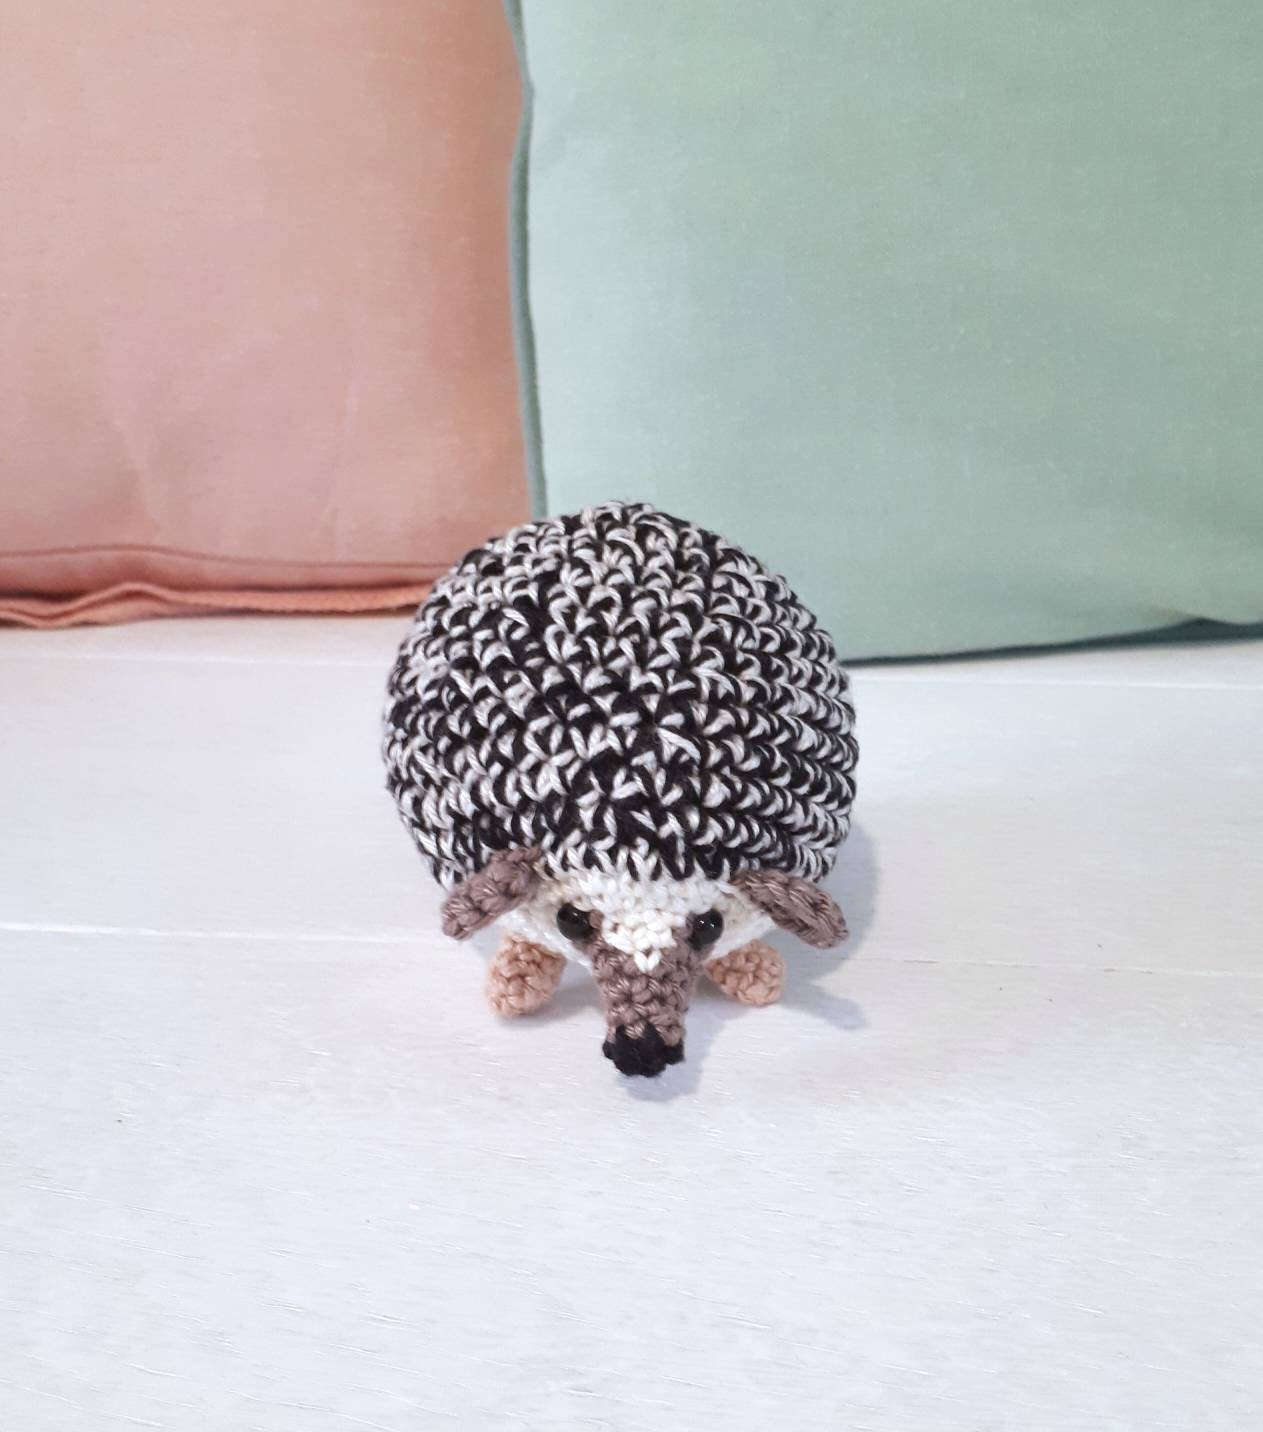 Crochet hedgehog stuffed animal plush toy